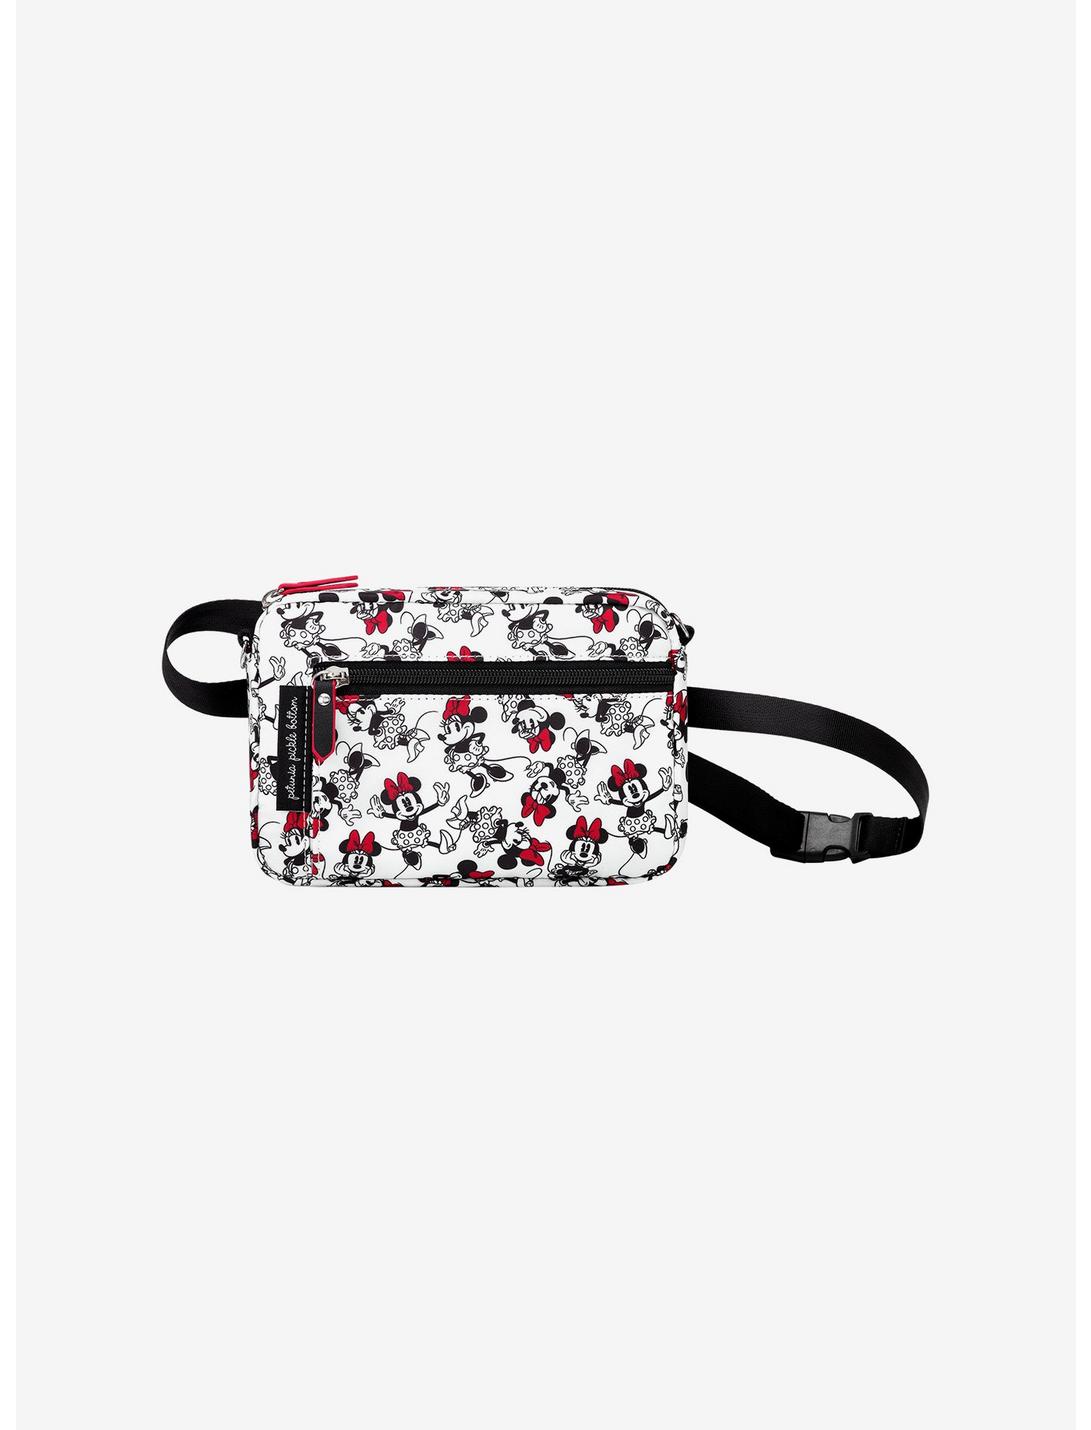 Petunia Pickle Bottom Disney Minnie Mouse Adventurer Belt Bag, , hi-res